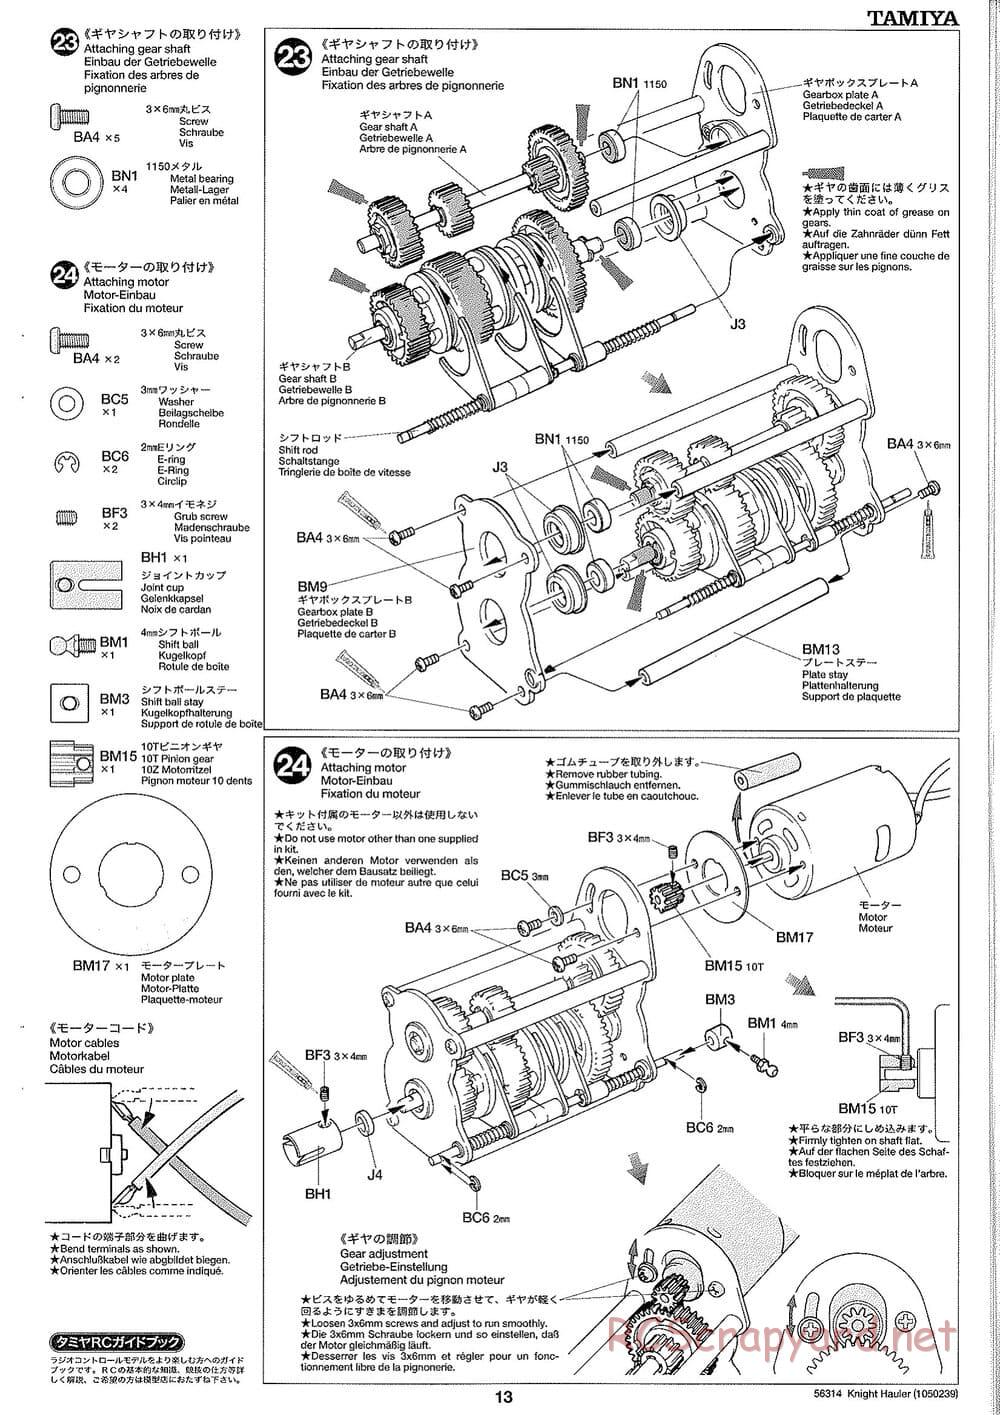 Tamiya - Knight Hauler Tractor Truck Chassis - Manual - Page 13